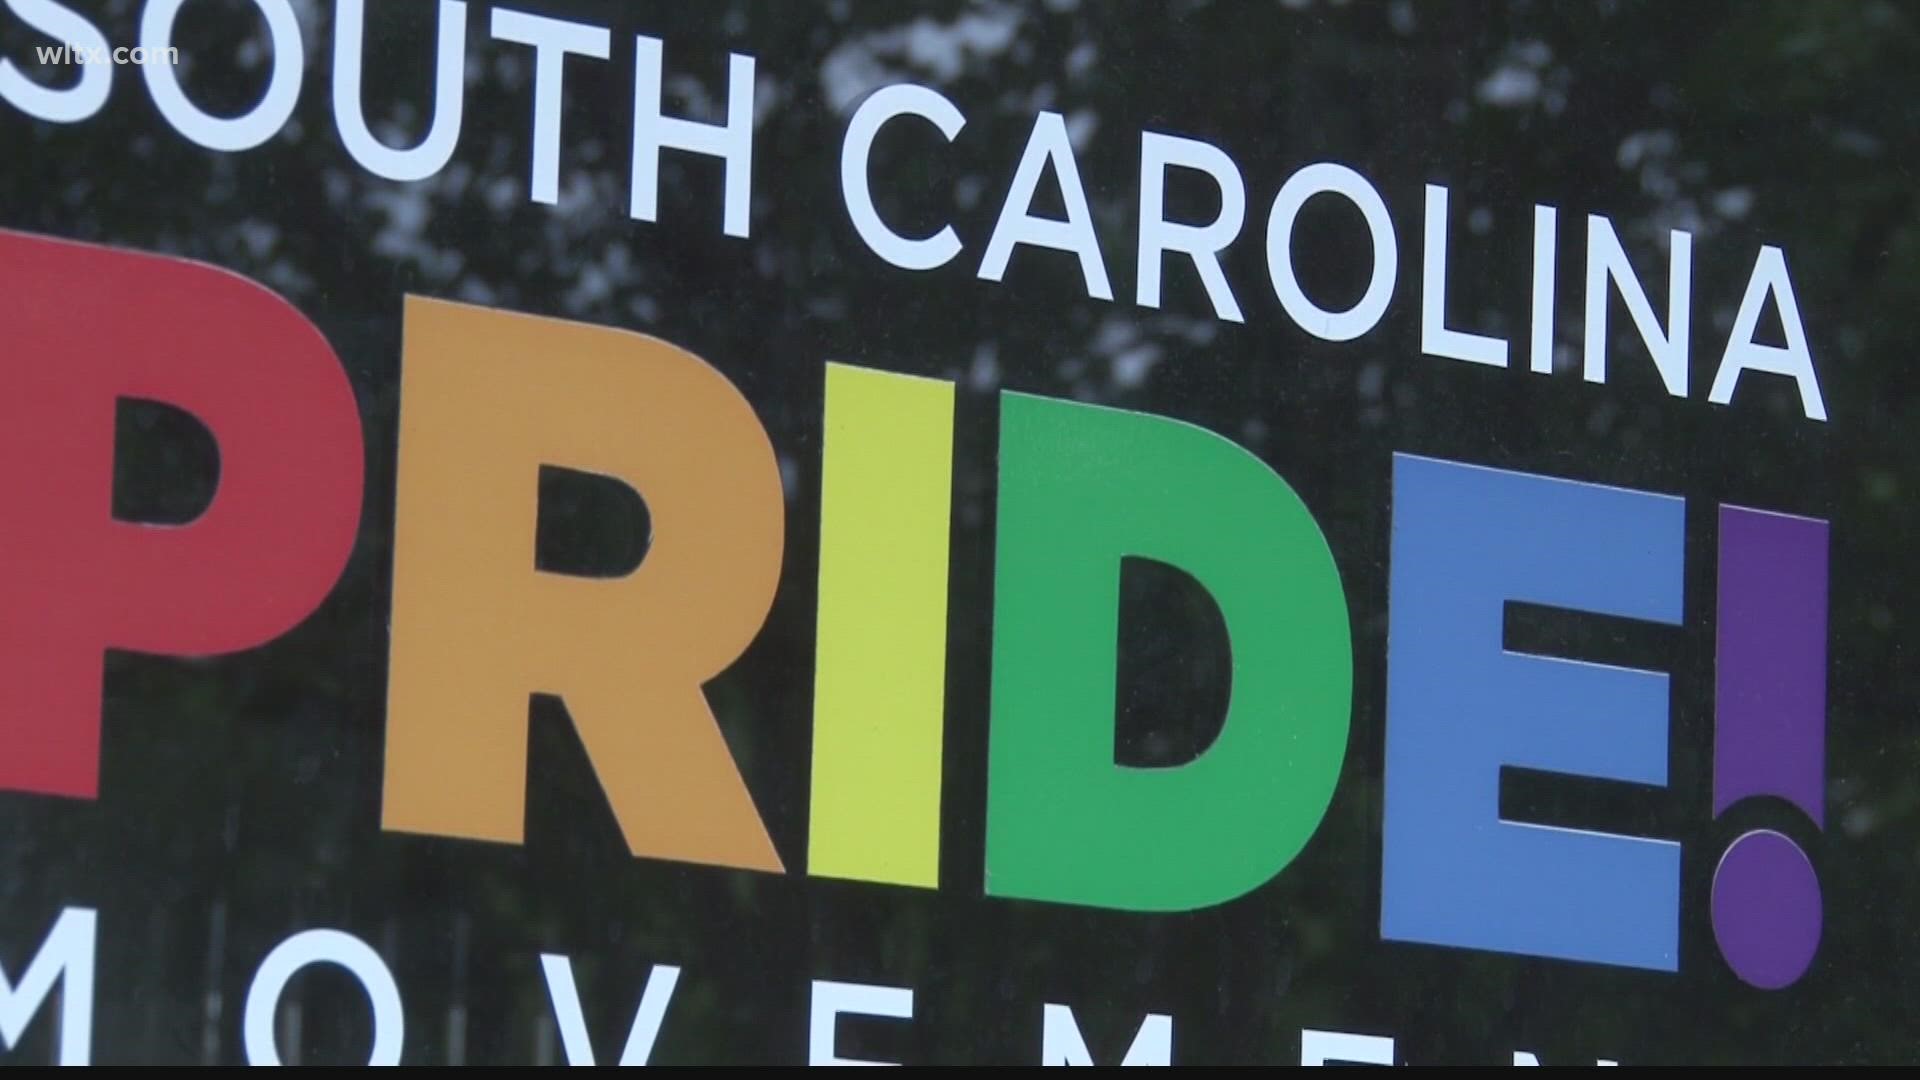 Famously Hot South Carolina Pride celebrates 33rd year